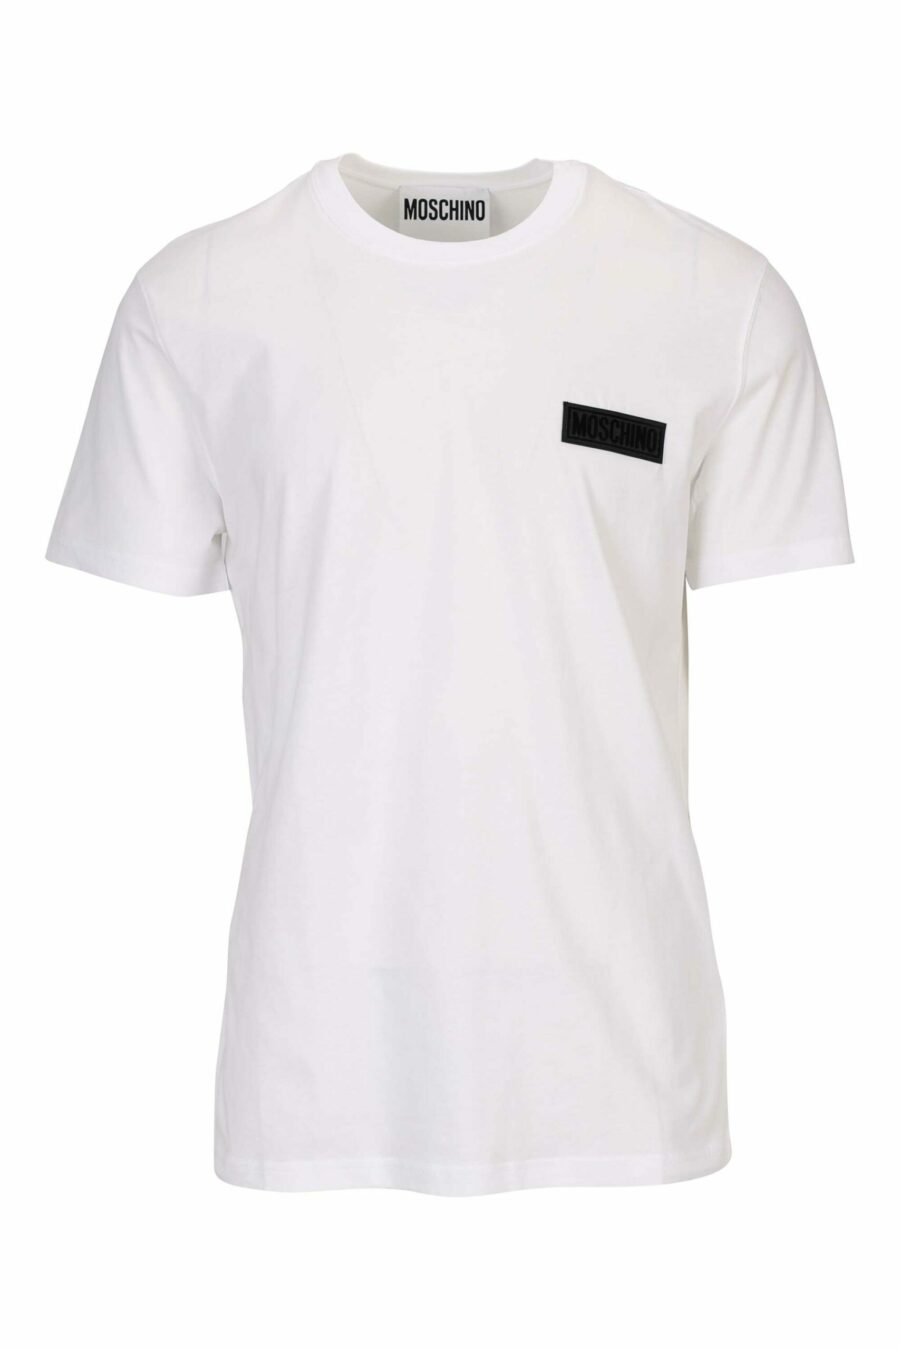 T-shirt branca com mini-logotipo preto - 667113394664